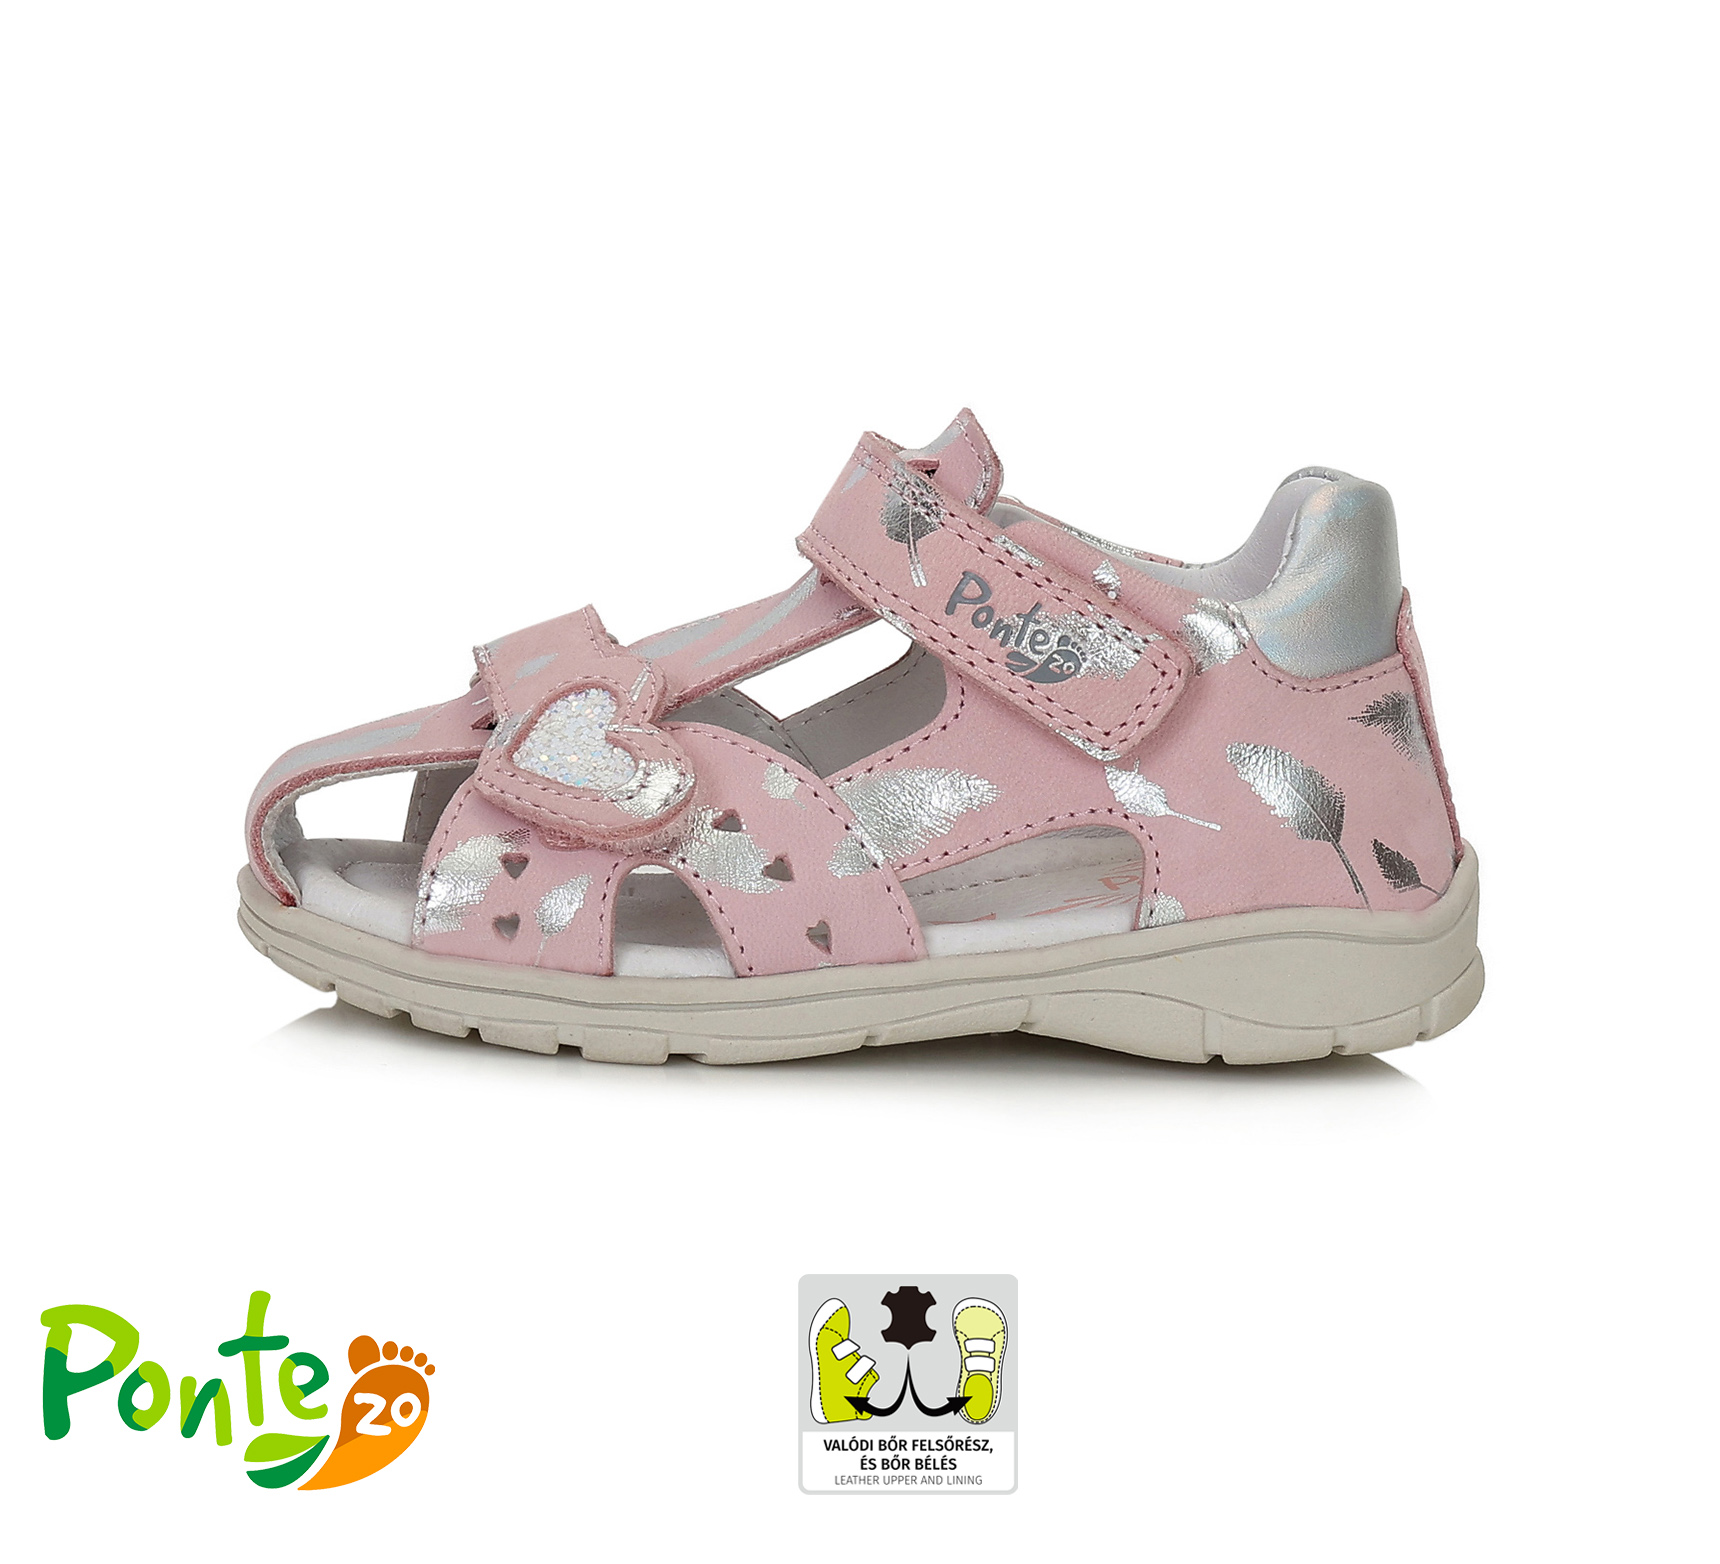 PONTE 20 dívčí kožené sandálky Pink/silver DA05-4-1949 Velikost: 22